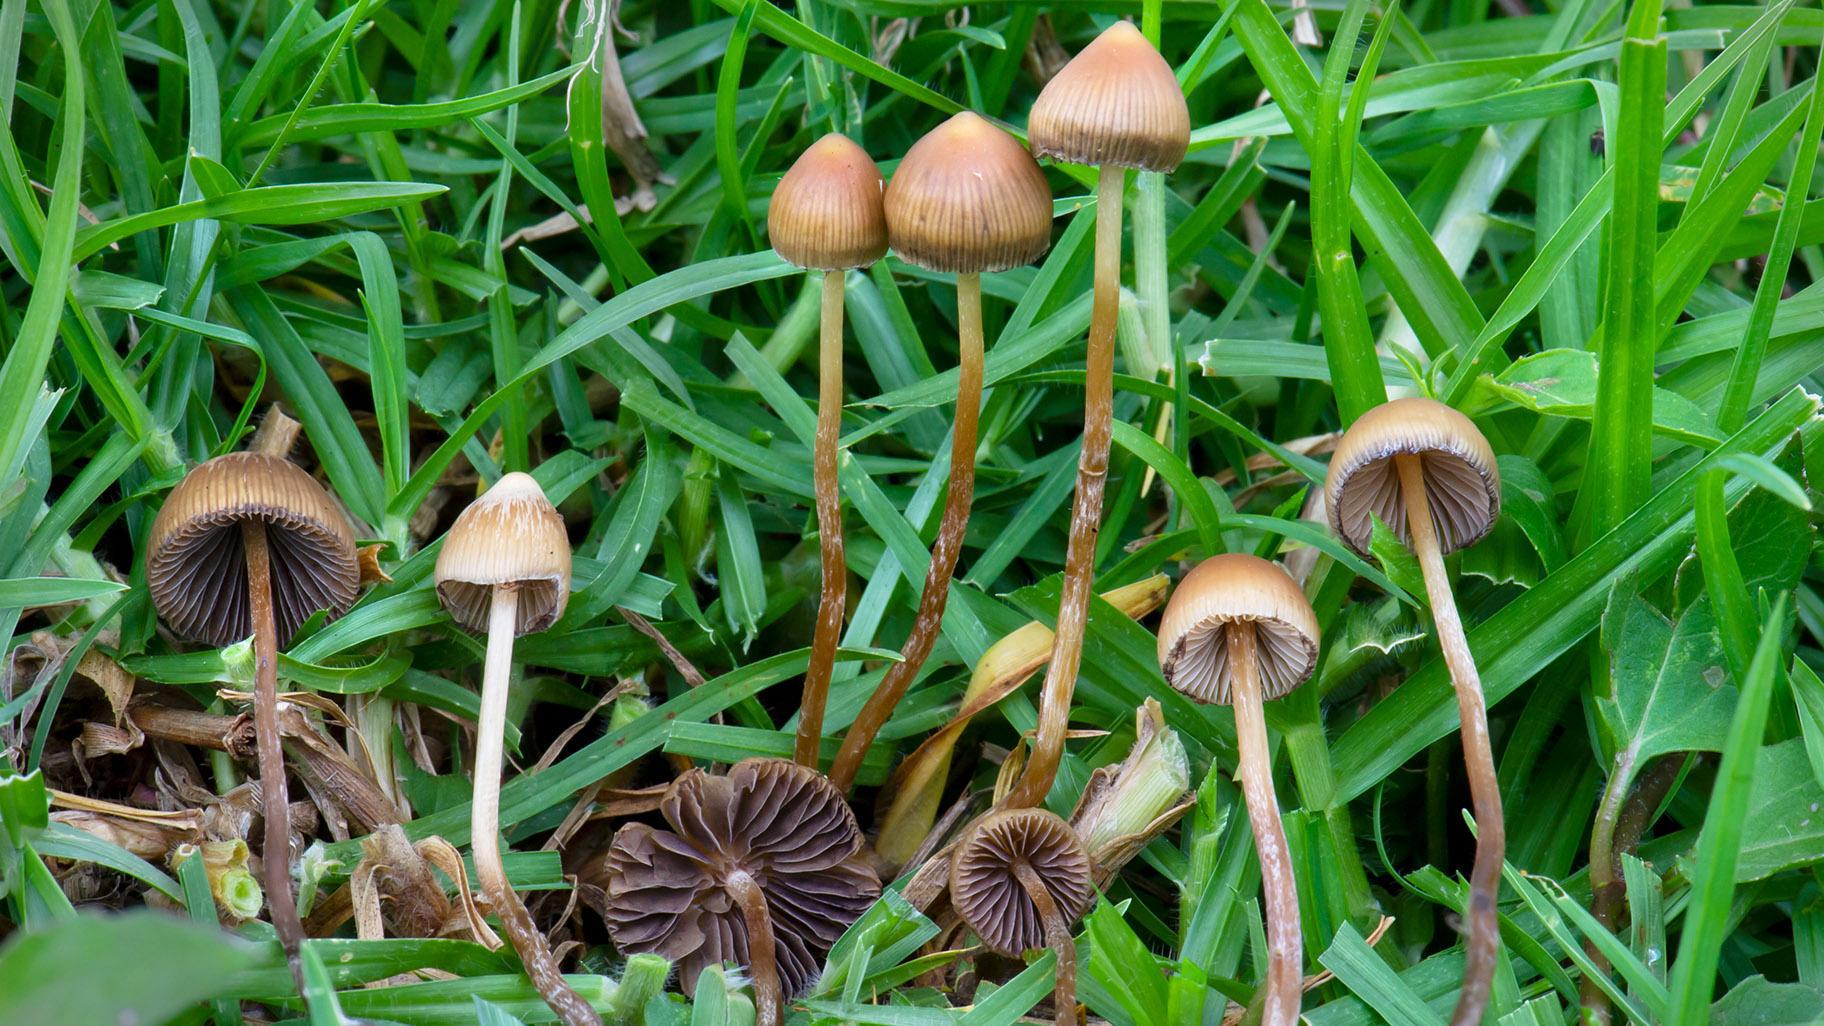 Psychedelic mushrooms growing in Veracruz, Mexico. (Alan Rockefeller / Wikimedia Commons)